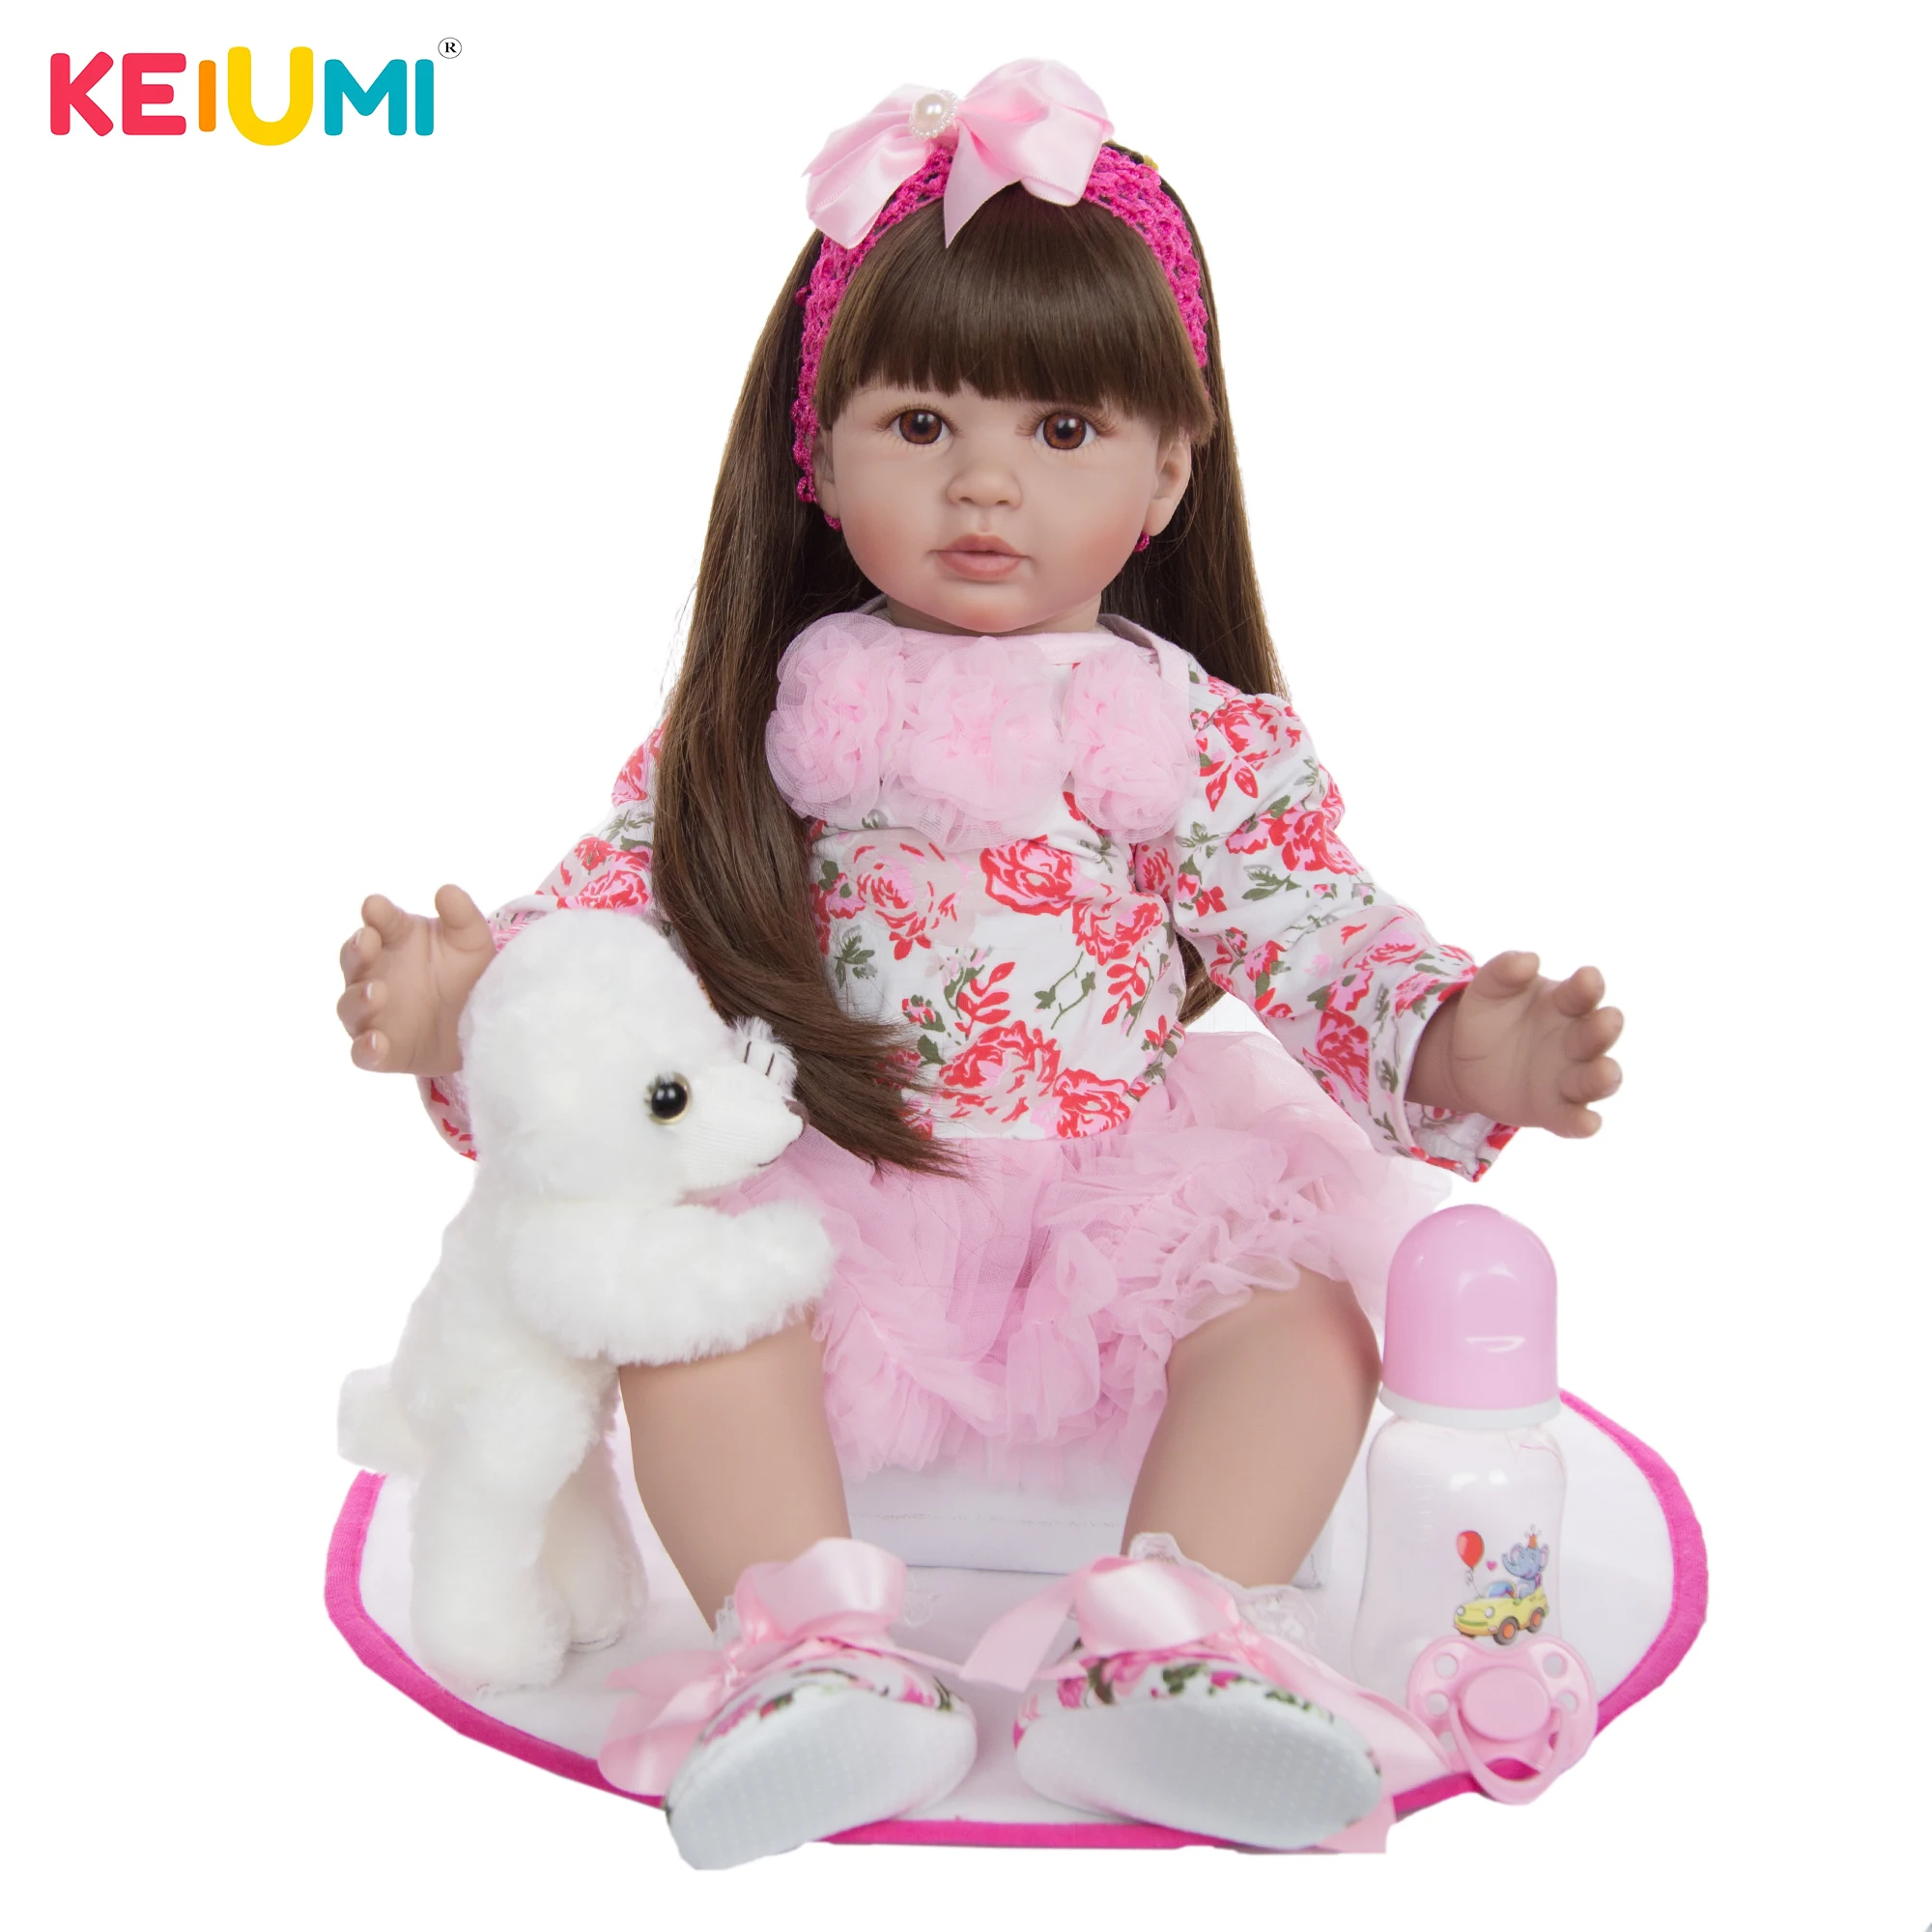 

KEIUMI New 24 inch Bonecas Infantil Meninas Doll Lifelike 60cm Reboen Girl With Long Hair Toy For Kids Birthday Surprise